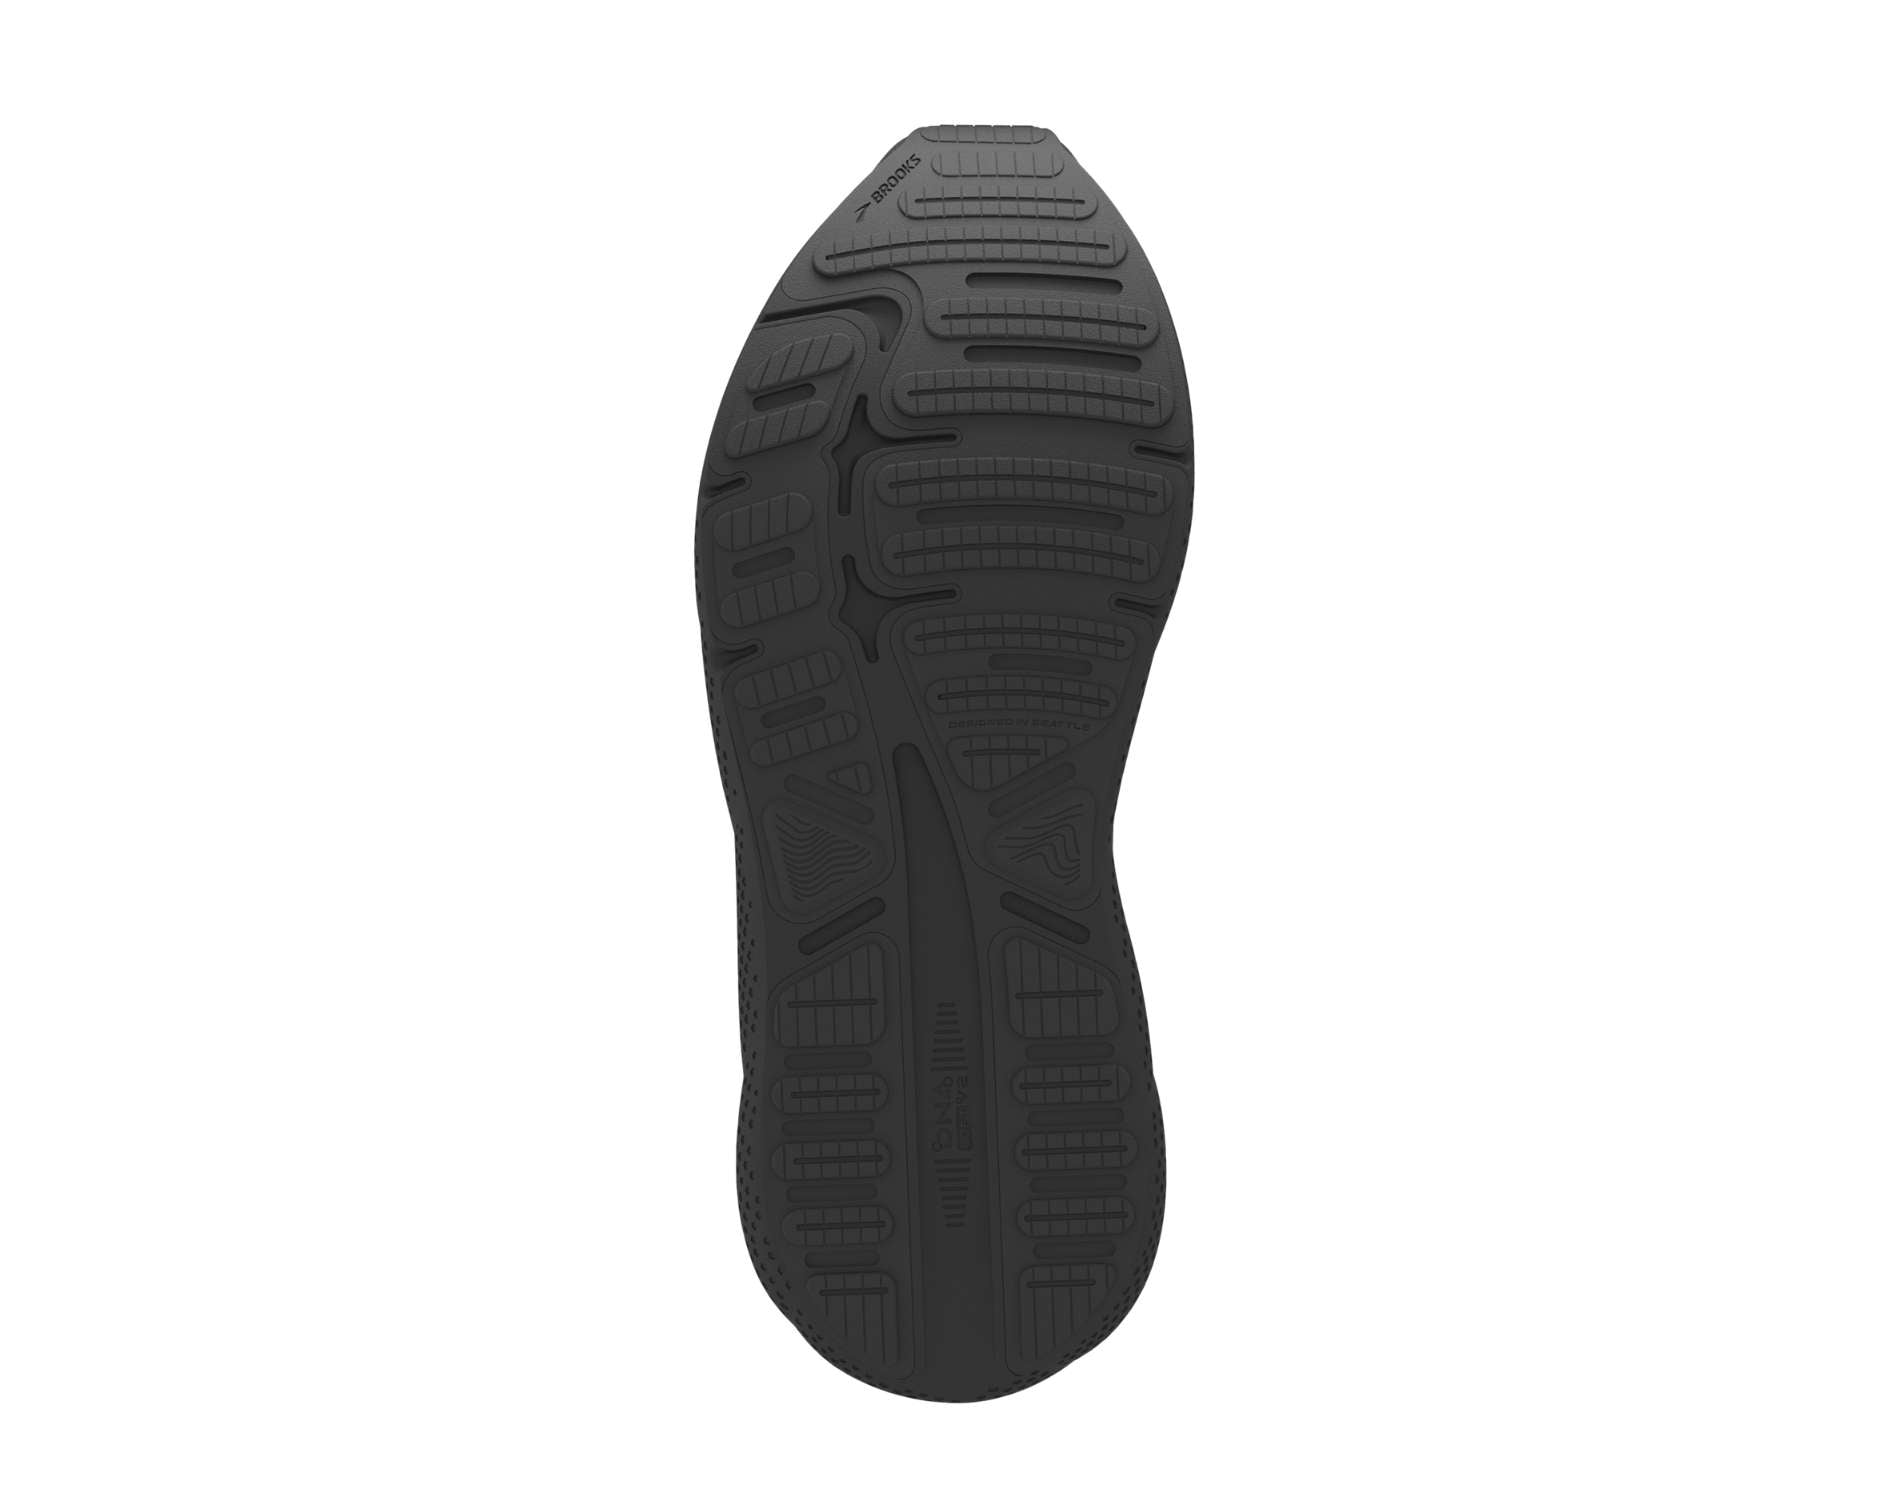 Brooks Ghost Max womens neutral running shoe in d wide width in black black ebony colour